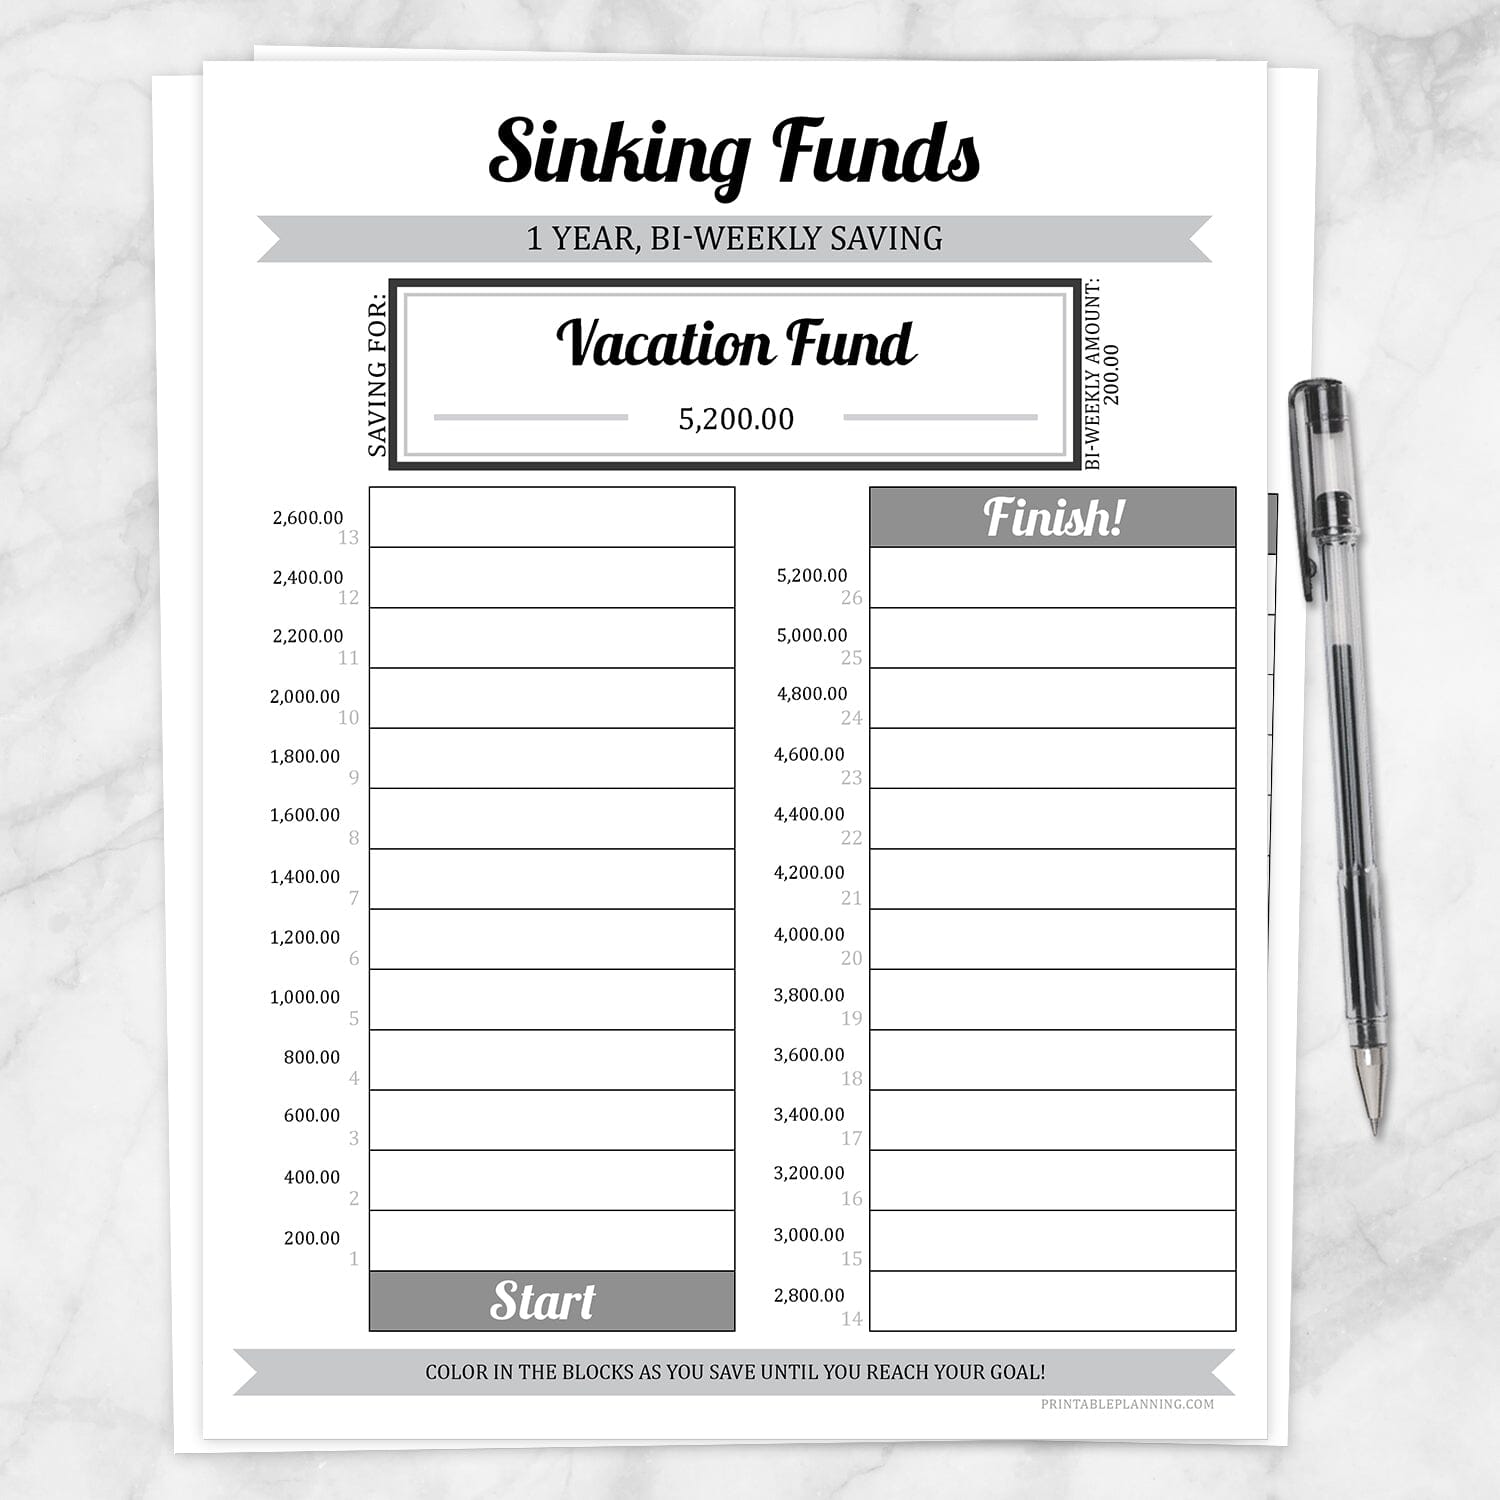 Printable Sinking Funds Savings Chart, 1 Year Bi-Weekly, at Printable Planning